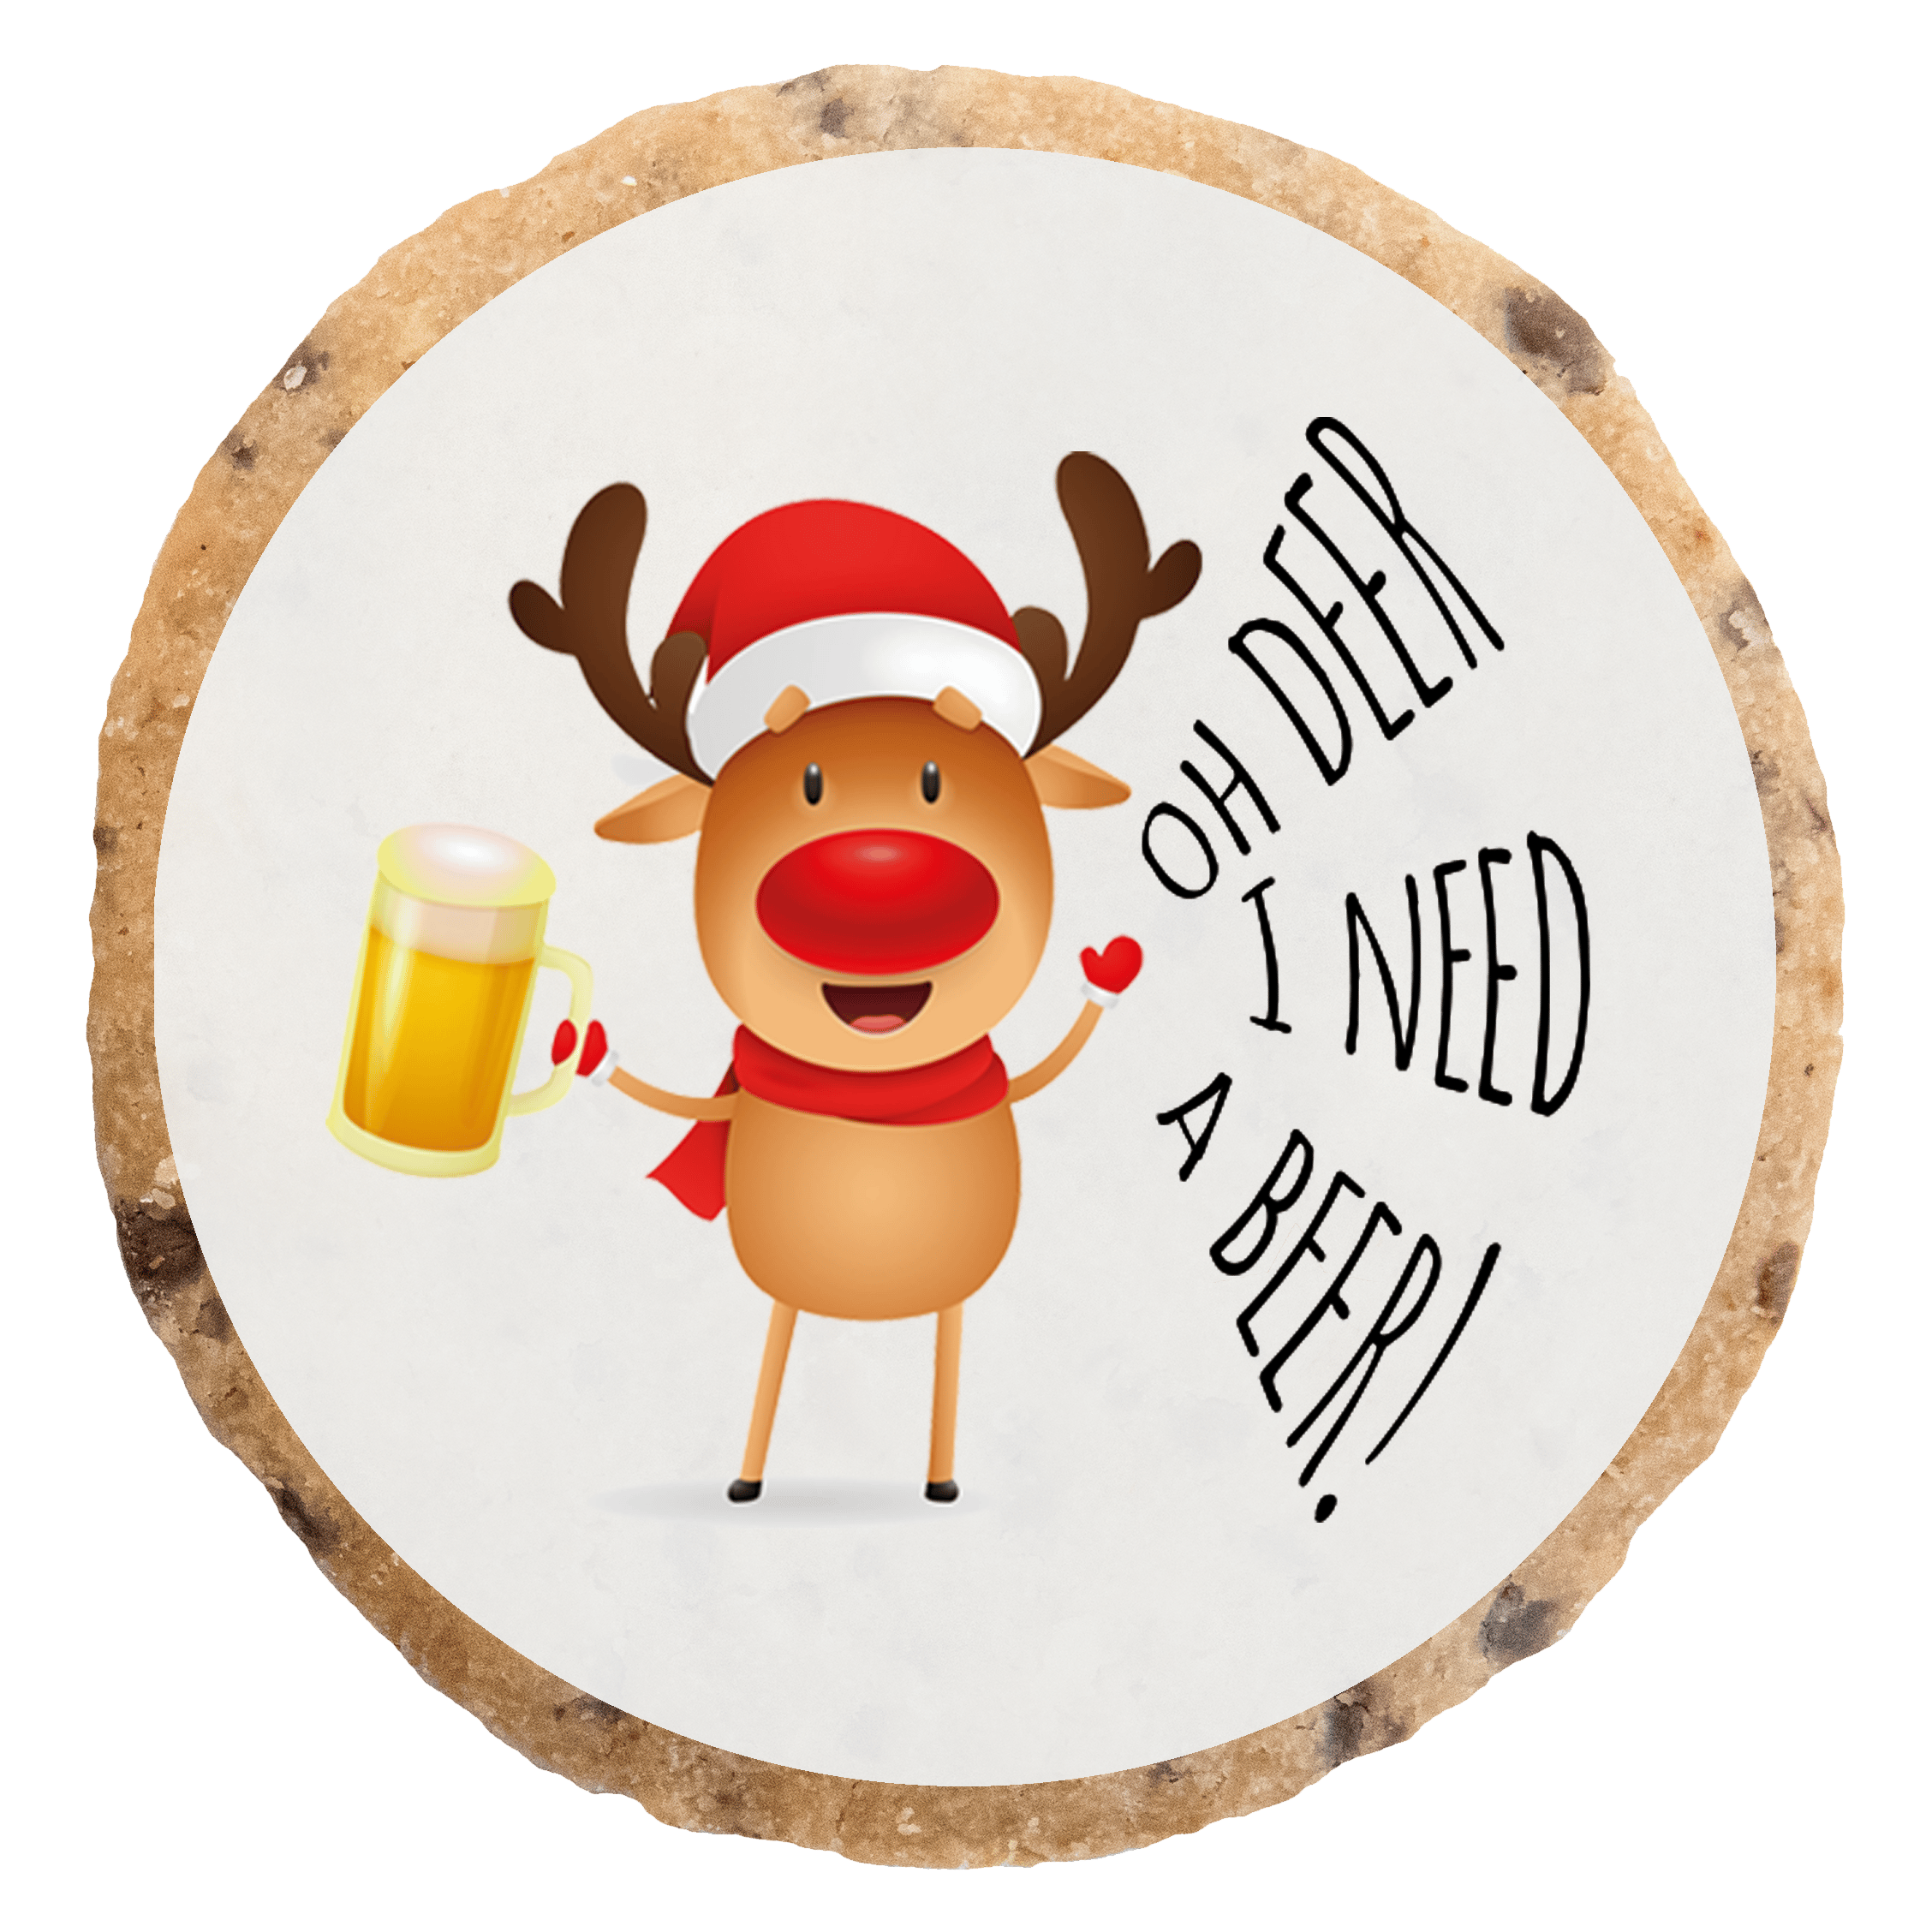 "Oh deer I need a beer" MotivKEKS 